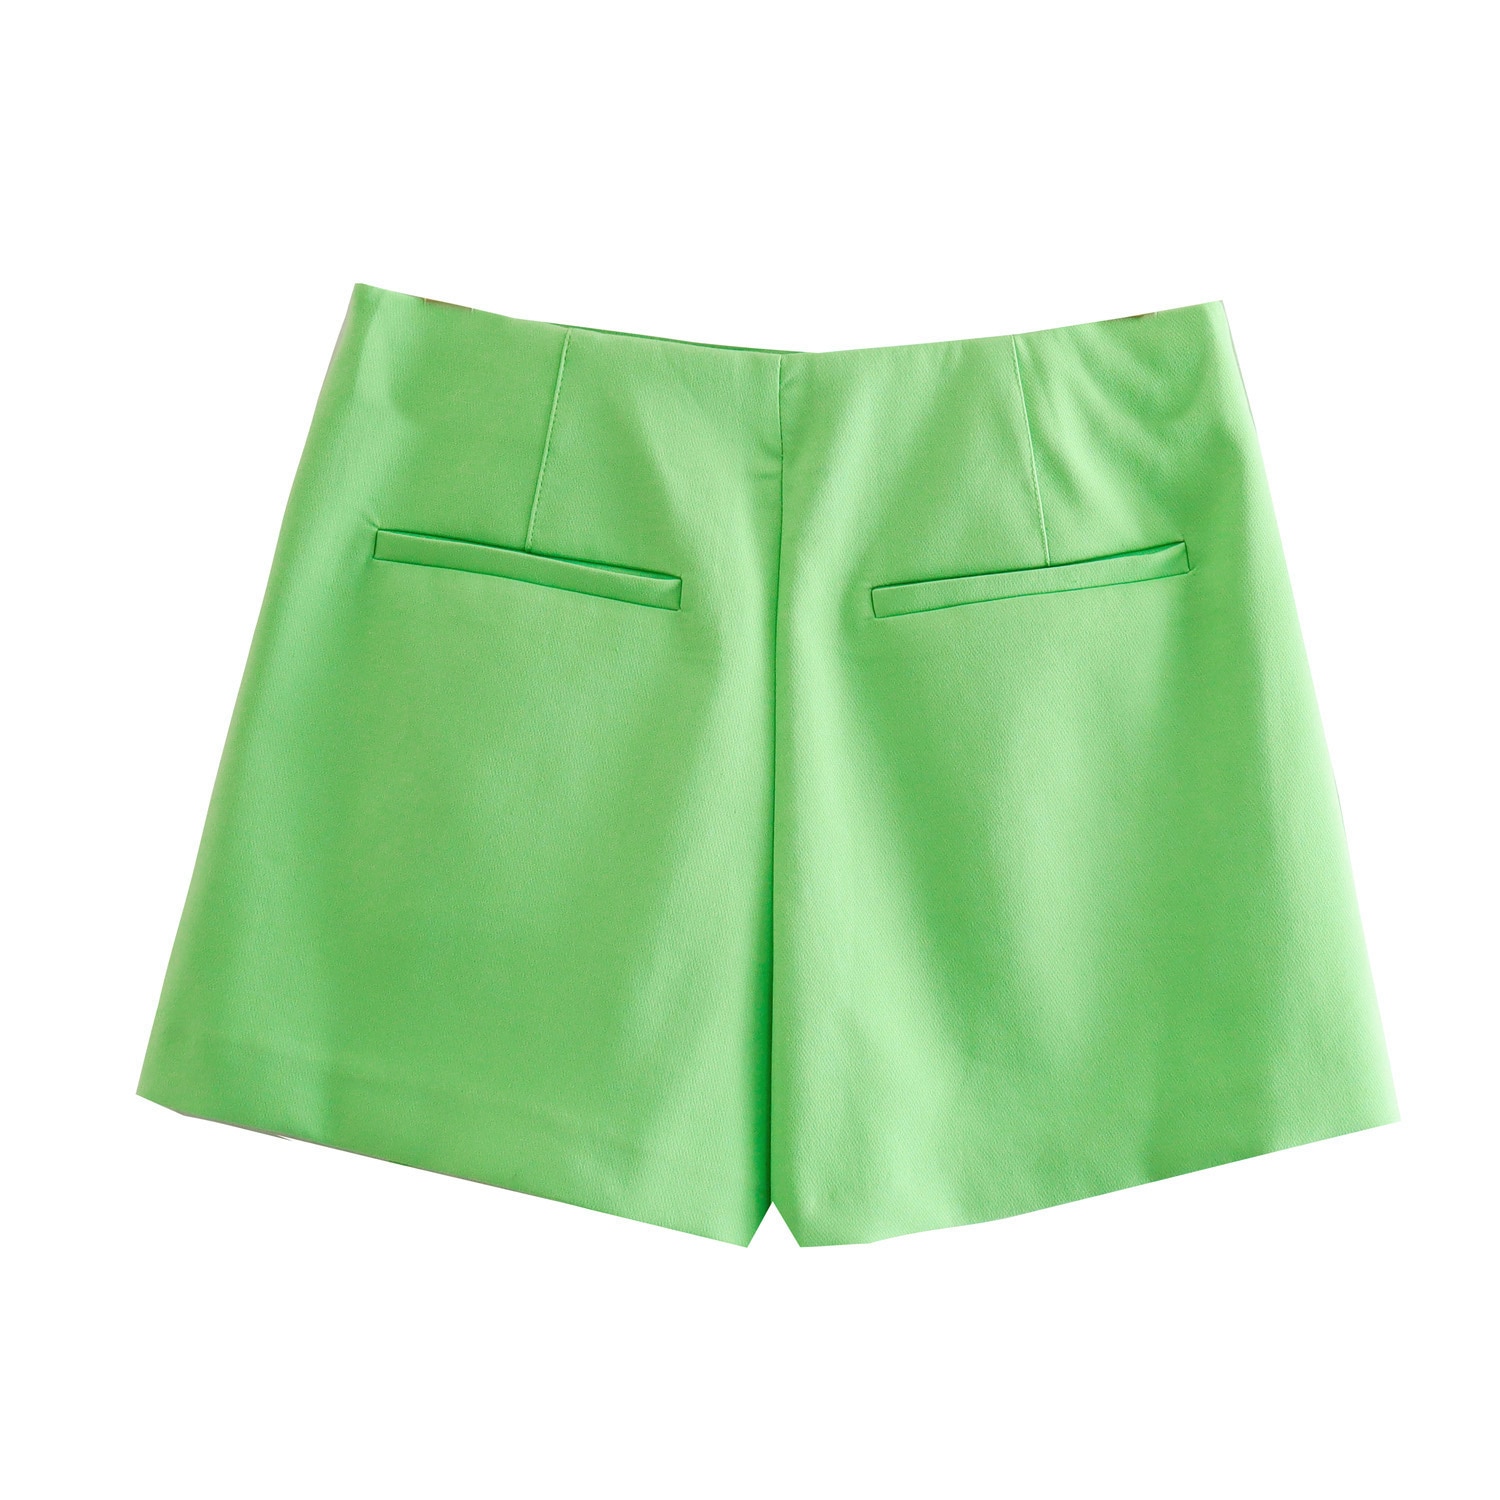 Zevity-Women-Fashion-Solid-Color-Hem-Irregular-Summer-Shorts-Lady-Chic-Side-Zipper-Casual-Shorts-Skirts-2